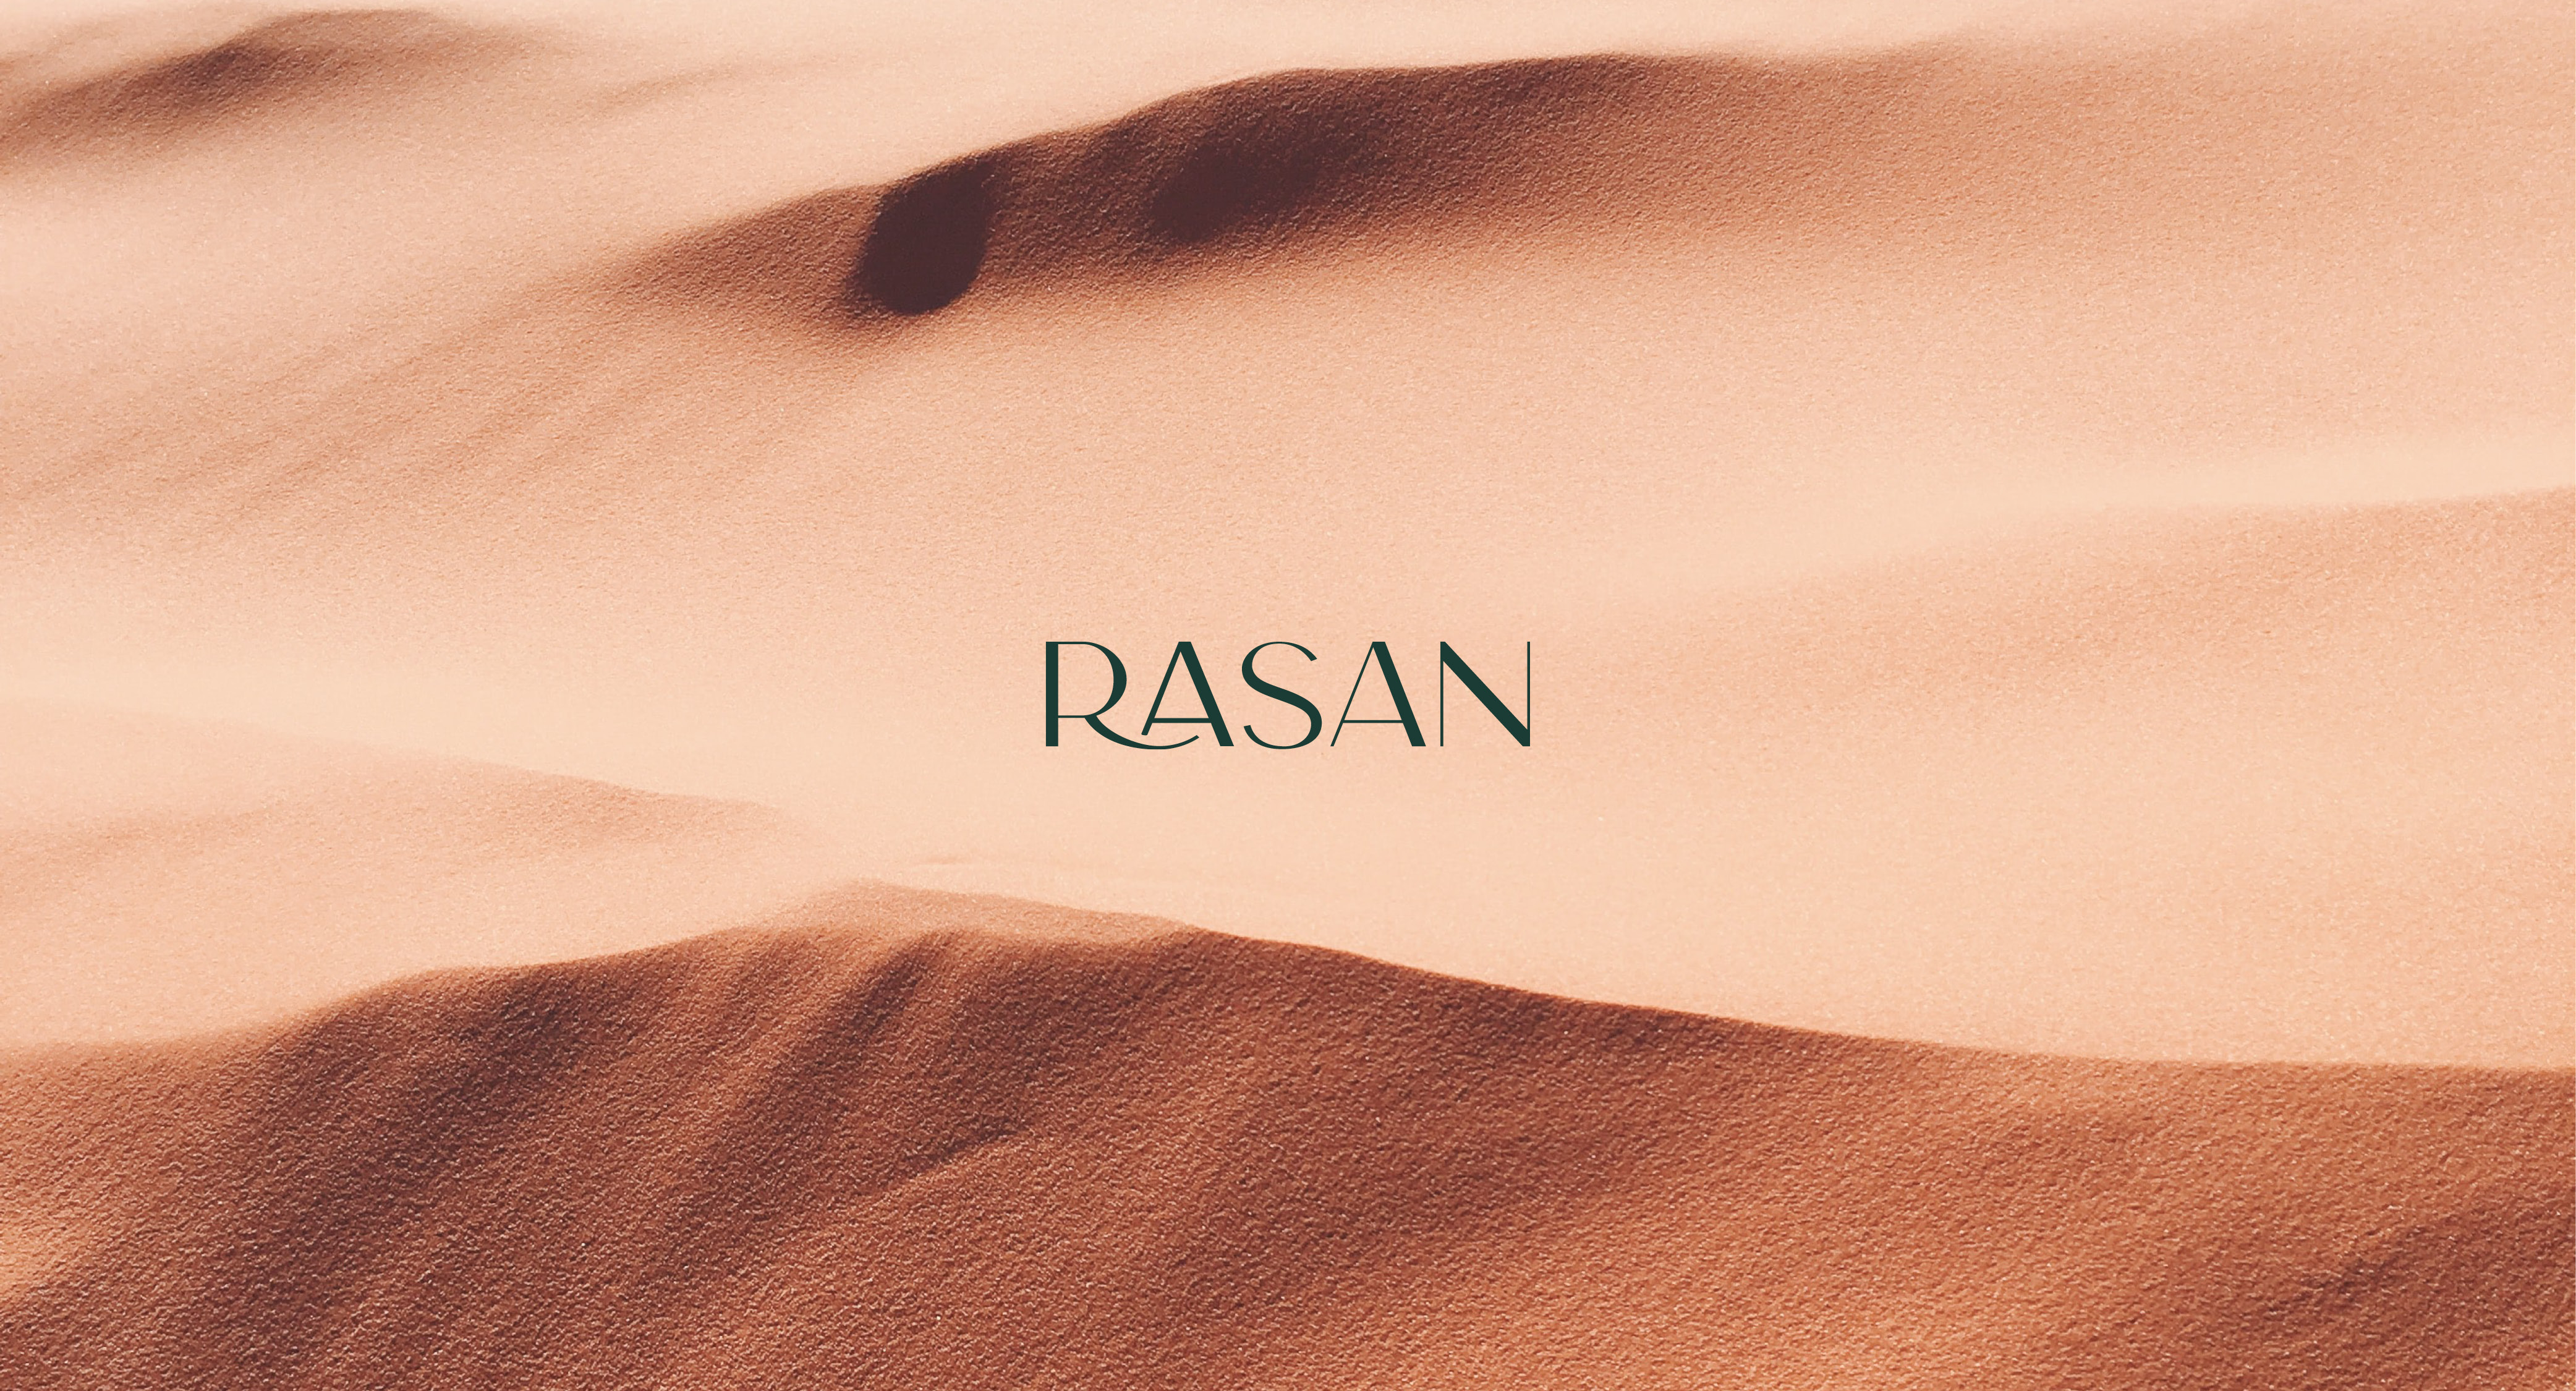 Qurany Studio Create Rasan Brand Design and Guideline